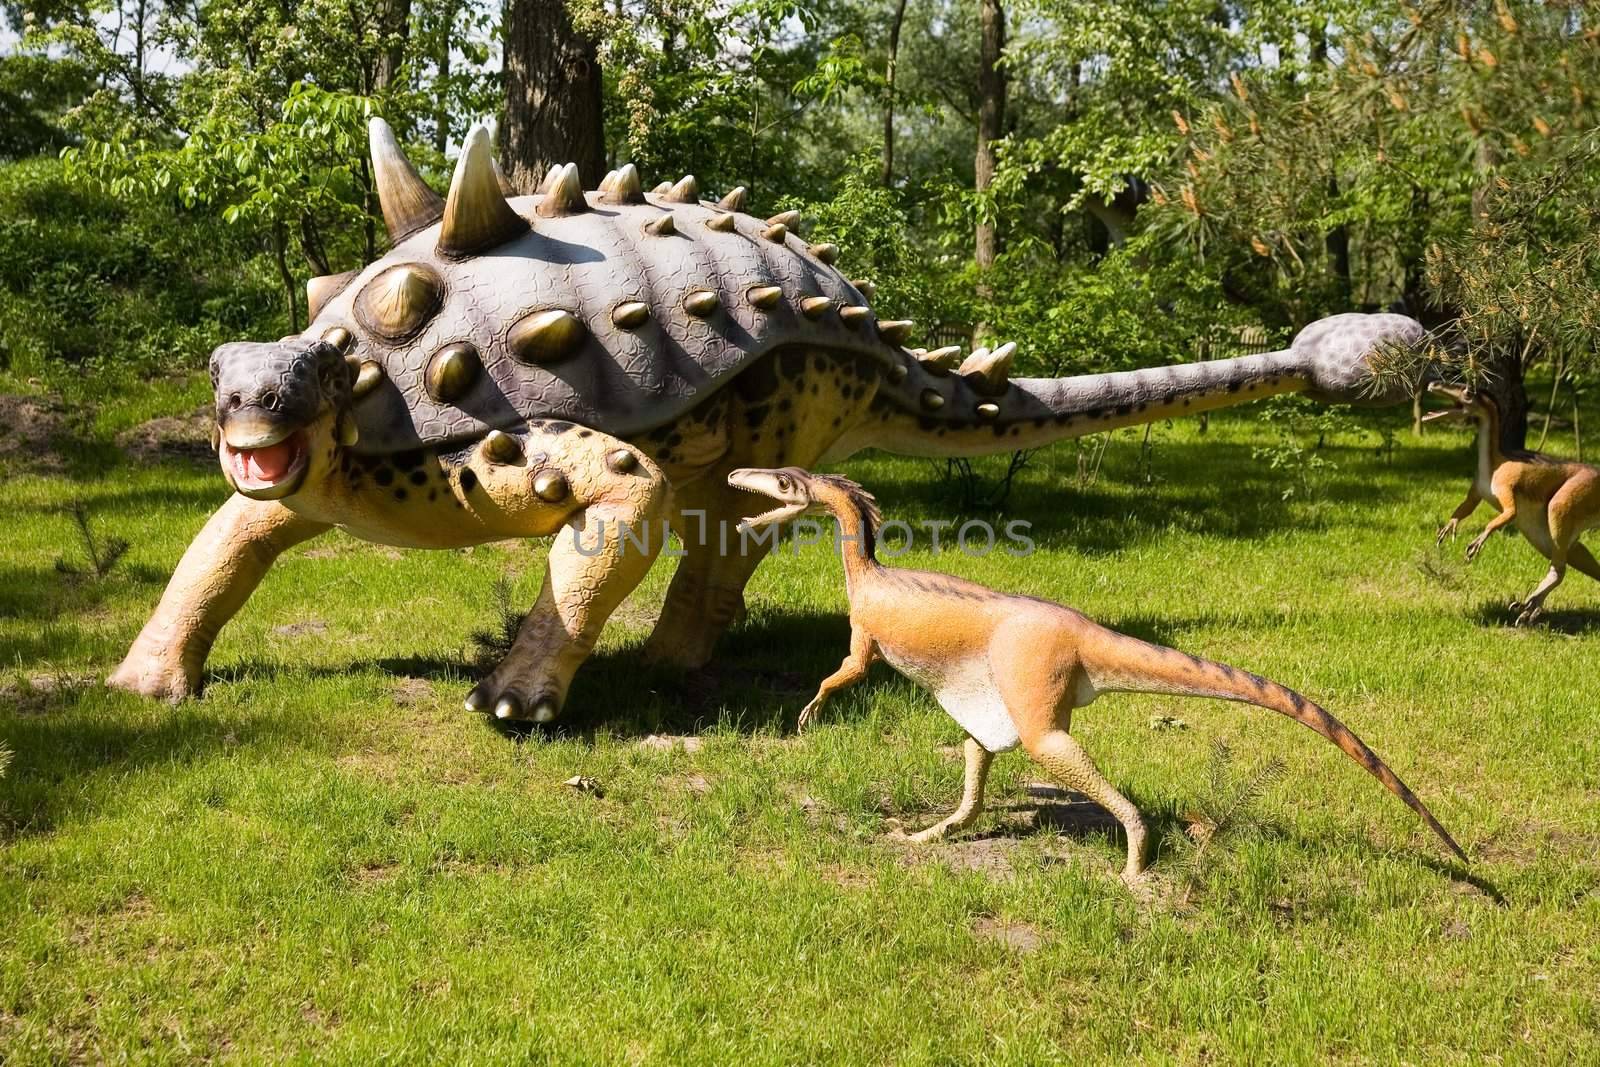 Jurassic park - set of dinosaurs - fight between Euoplocephalus tutus and Troodon formosus